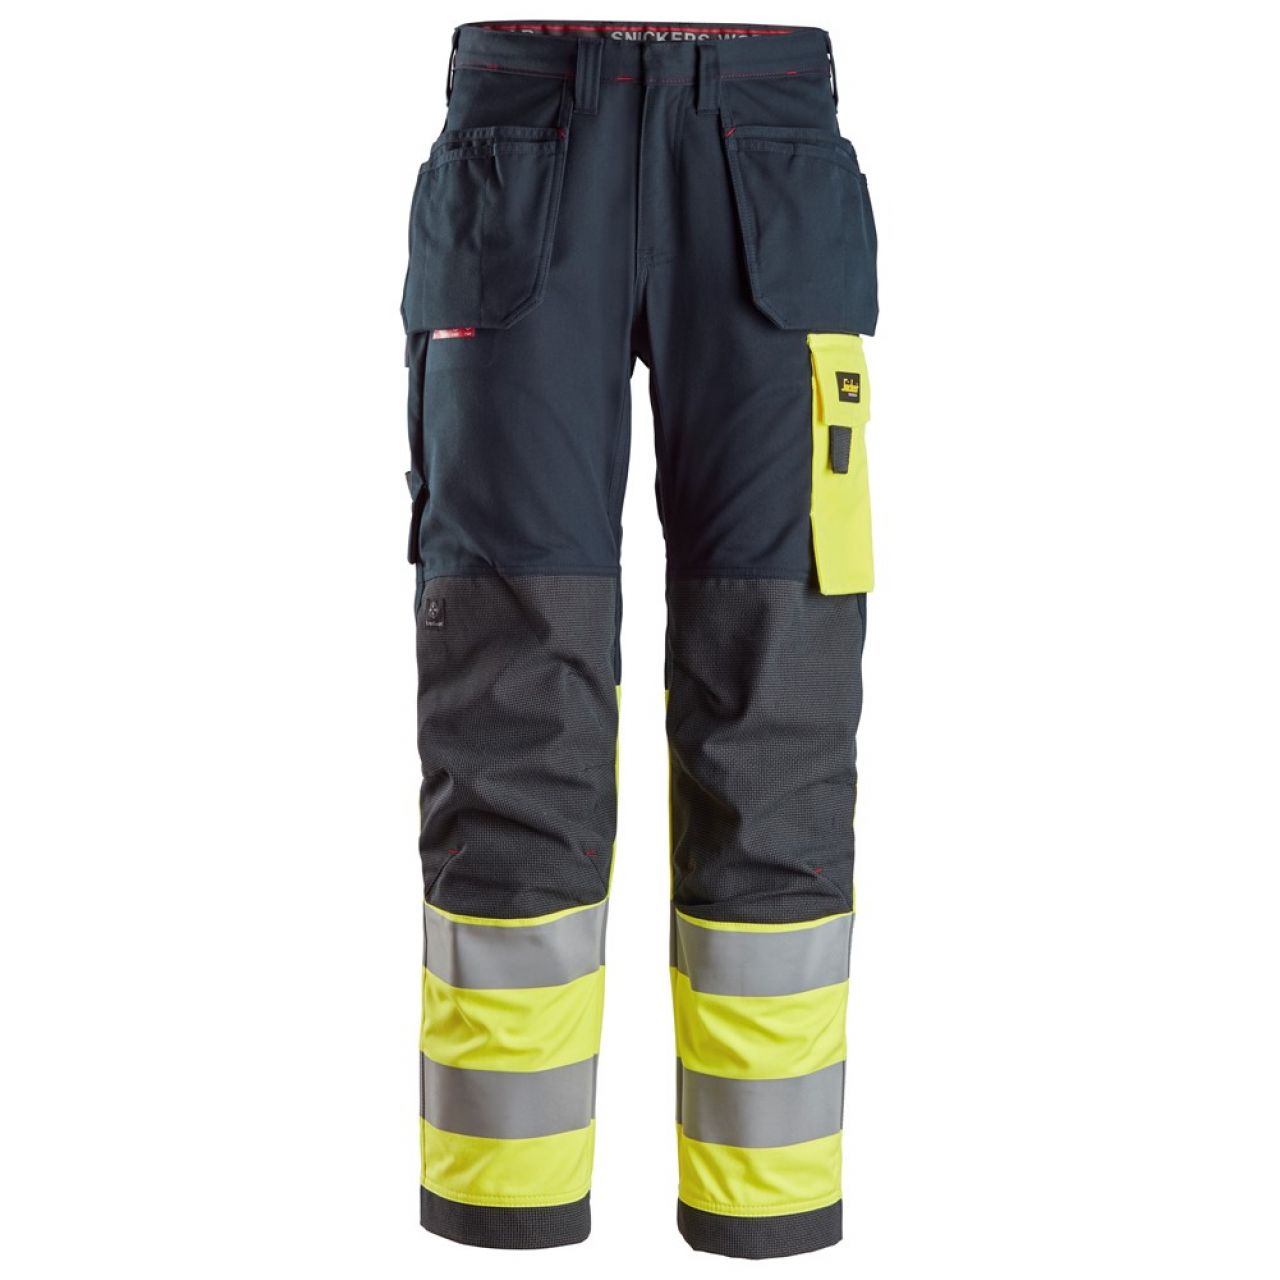 6276 Pantalones largos de trabajo de alta visibilidad clase 1 con bolsillos flotantes ProtecWork azul marino-amarillo talla 108